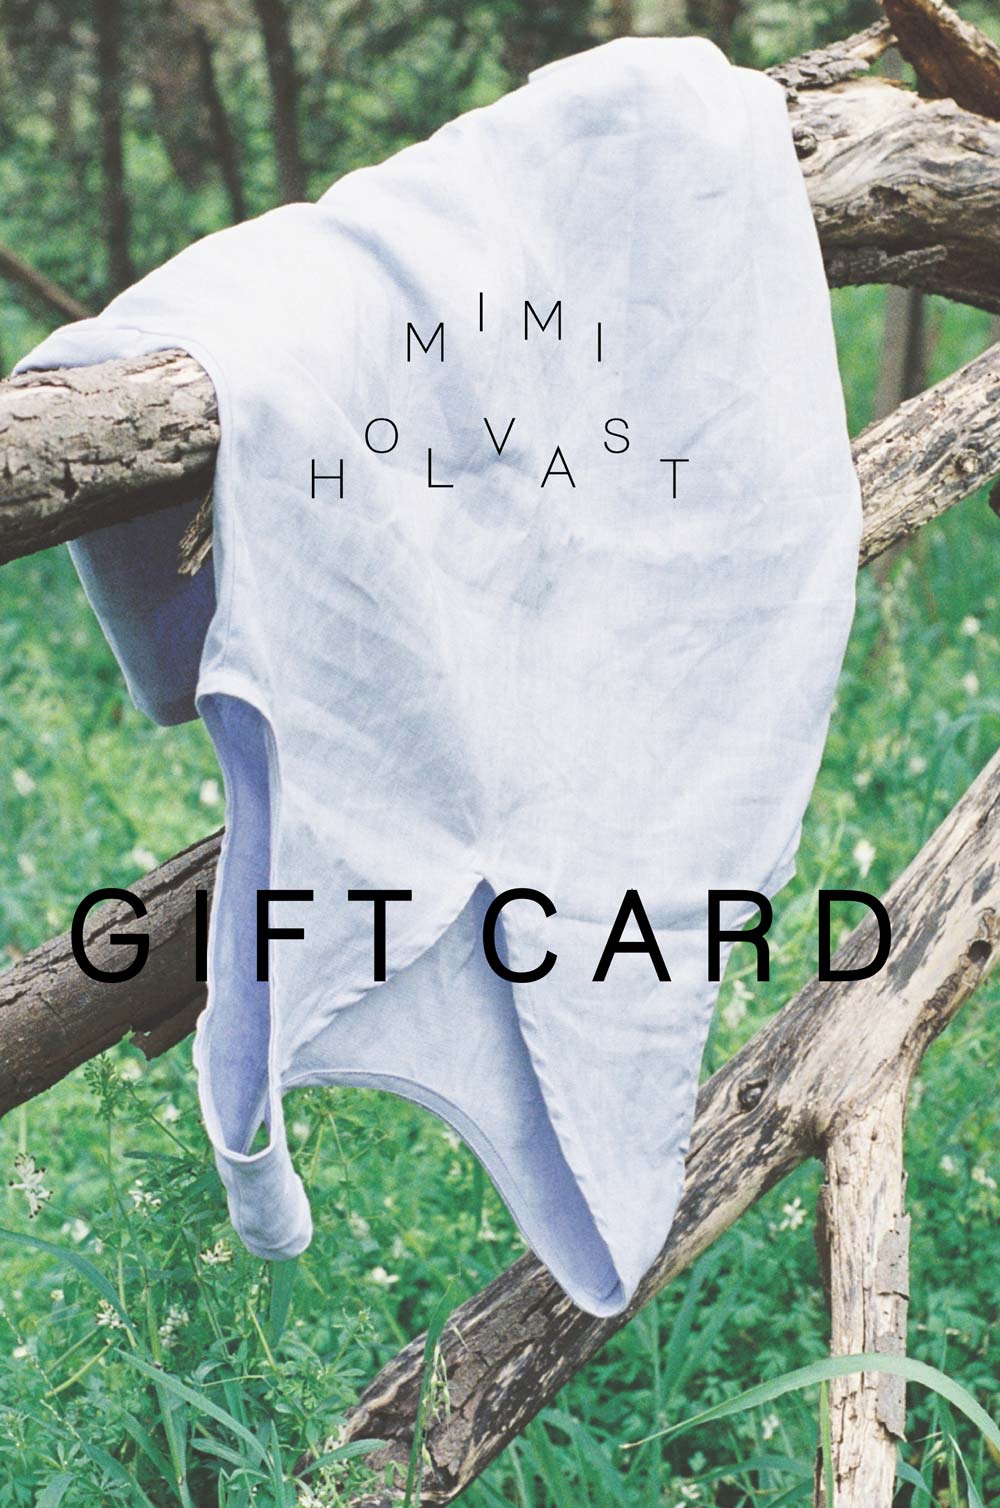 Mimi holvast gift card - handmade ethical fashion